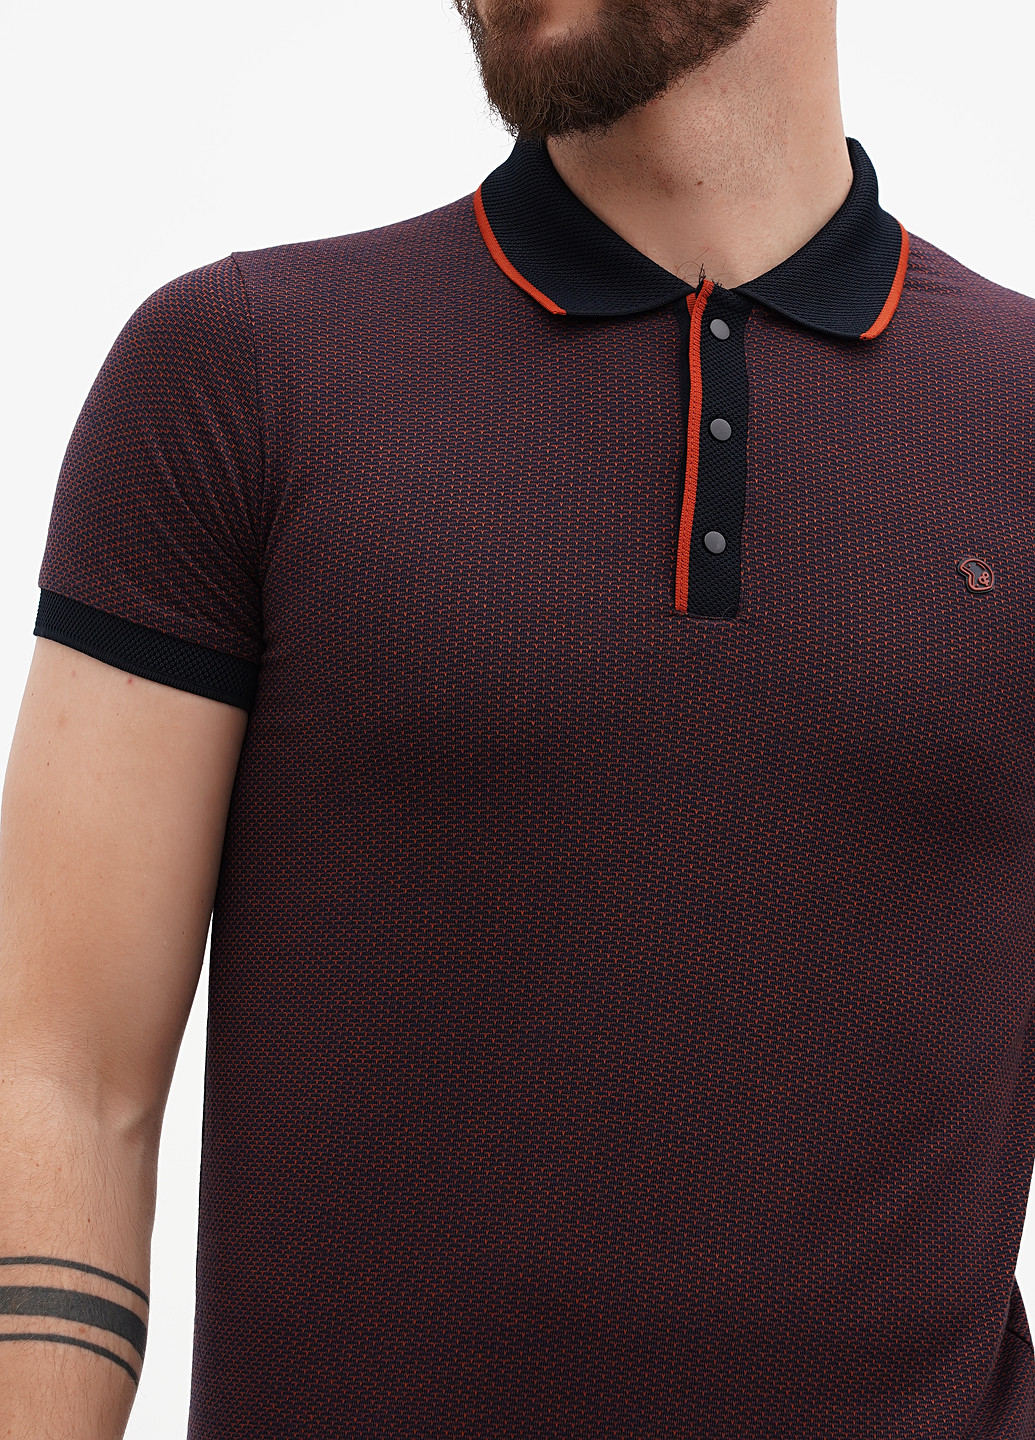 Бордовая футболка-поло для мужчин Benson & Cherry с геометрическим узором